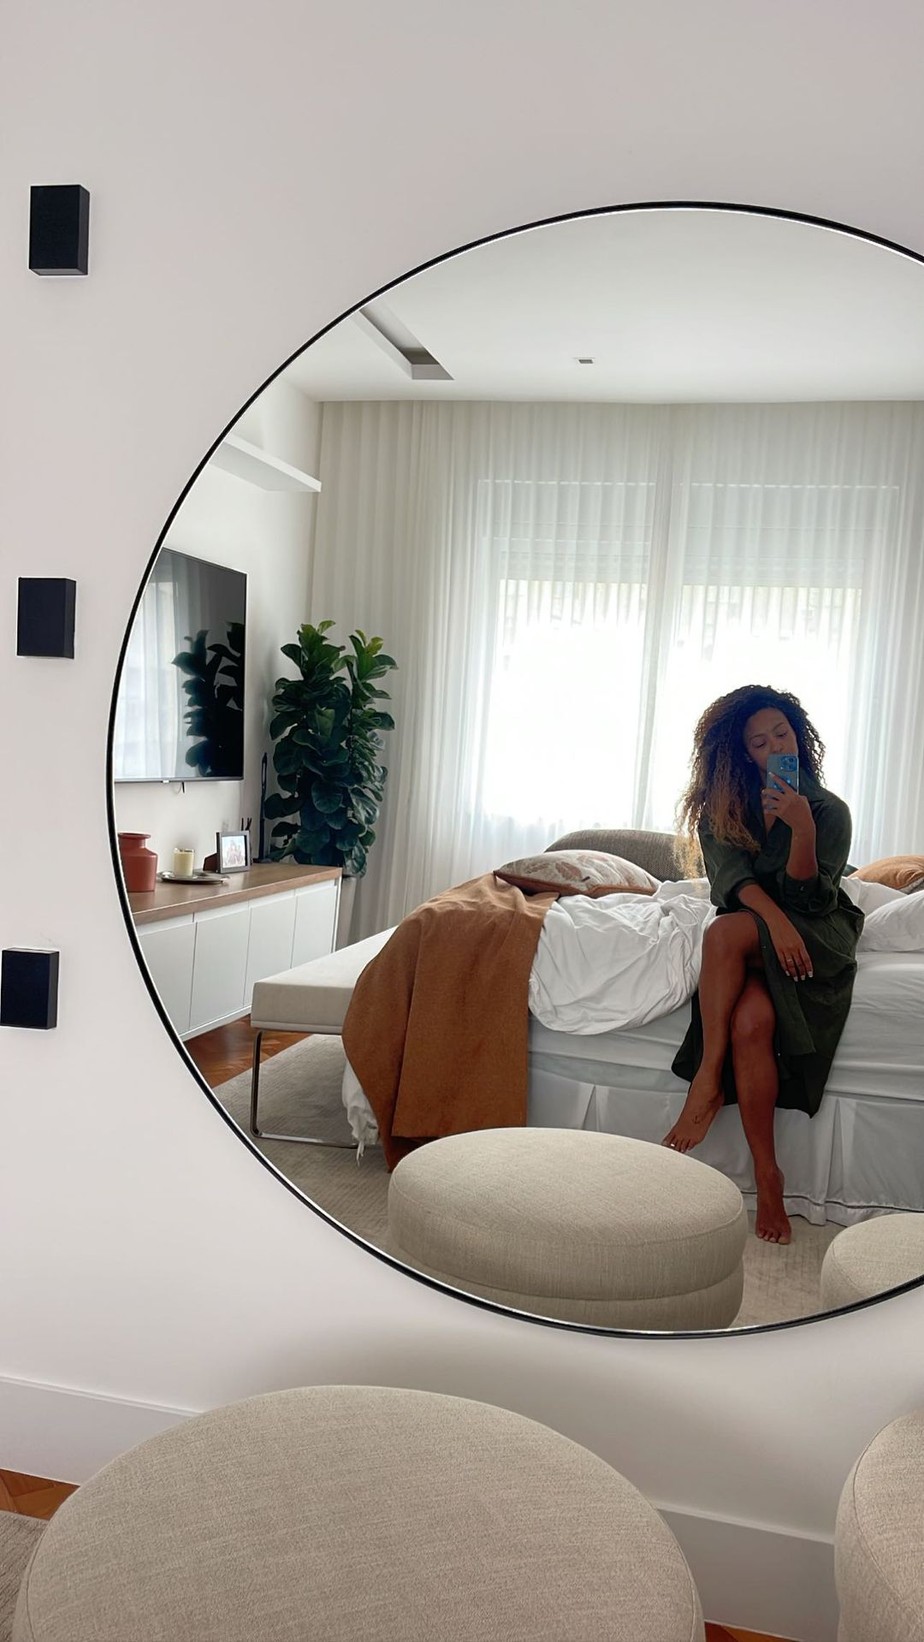 Ao acordar, atriz Sheron Menezzes exibe beleza natural em foto na cama